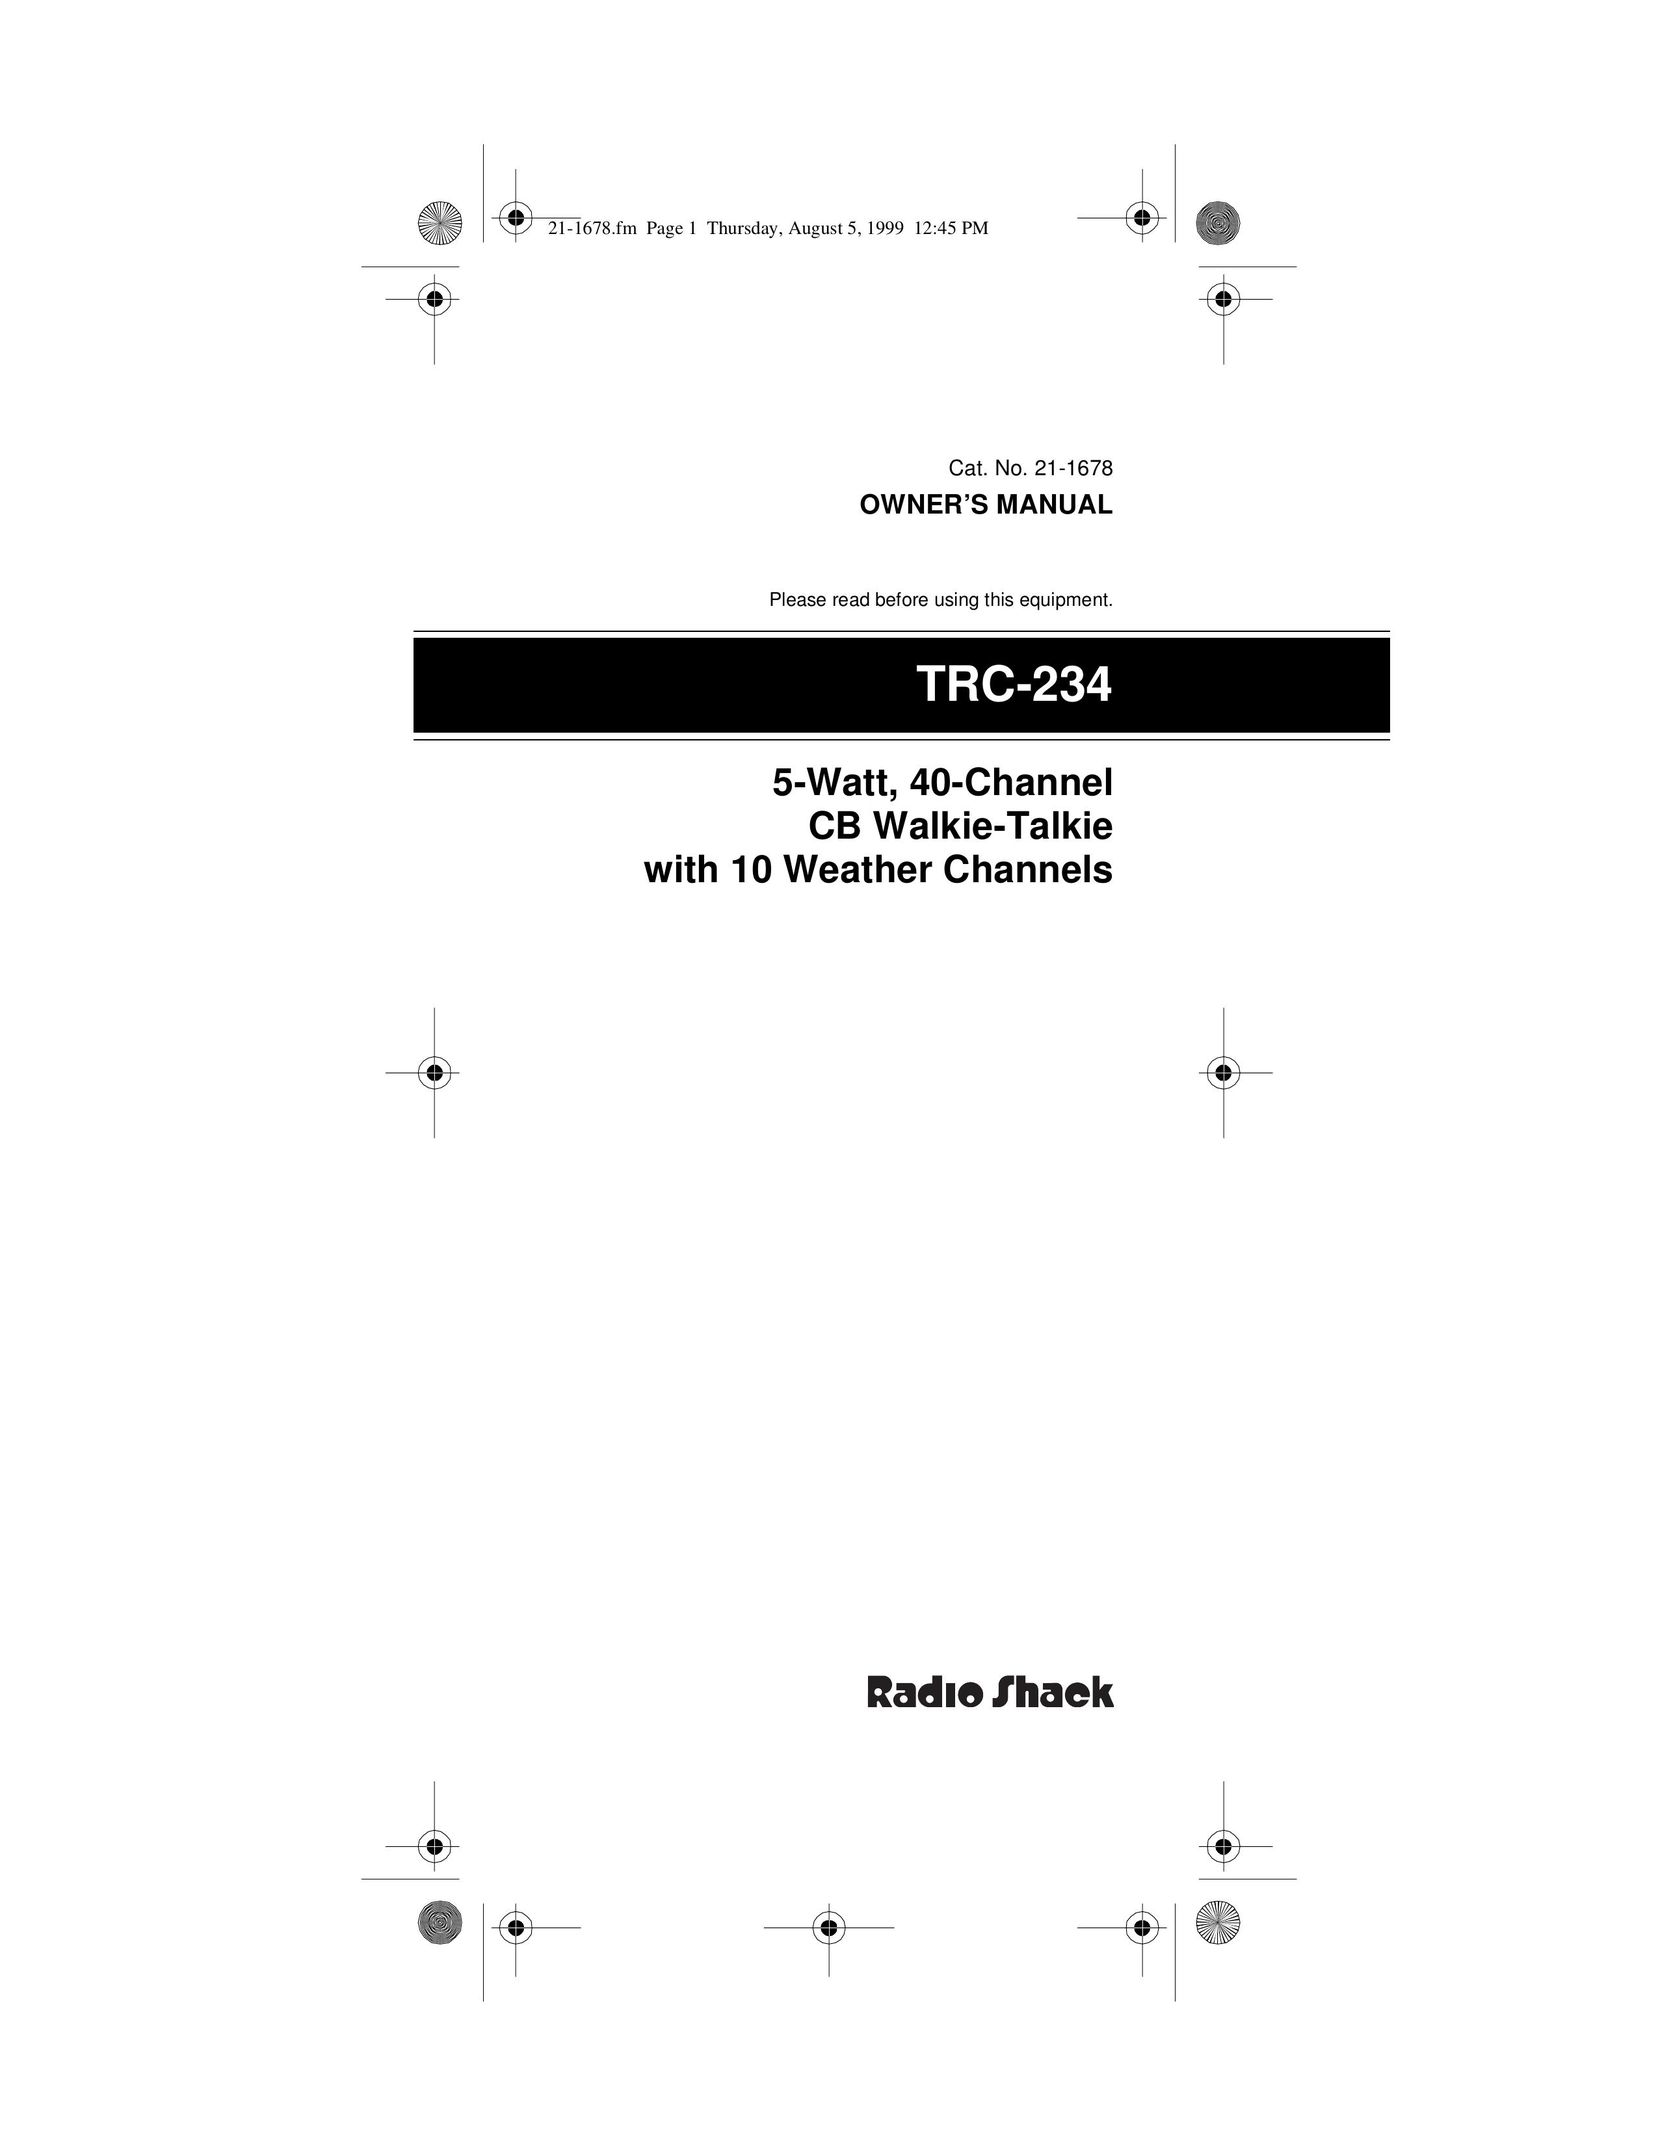 Radio Shack TRC-234 Two-Way Radio User Manual